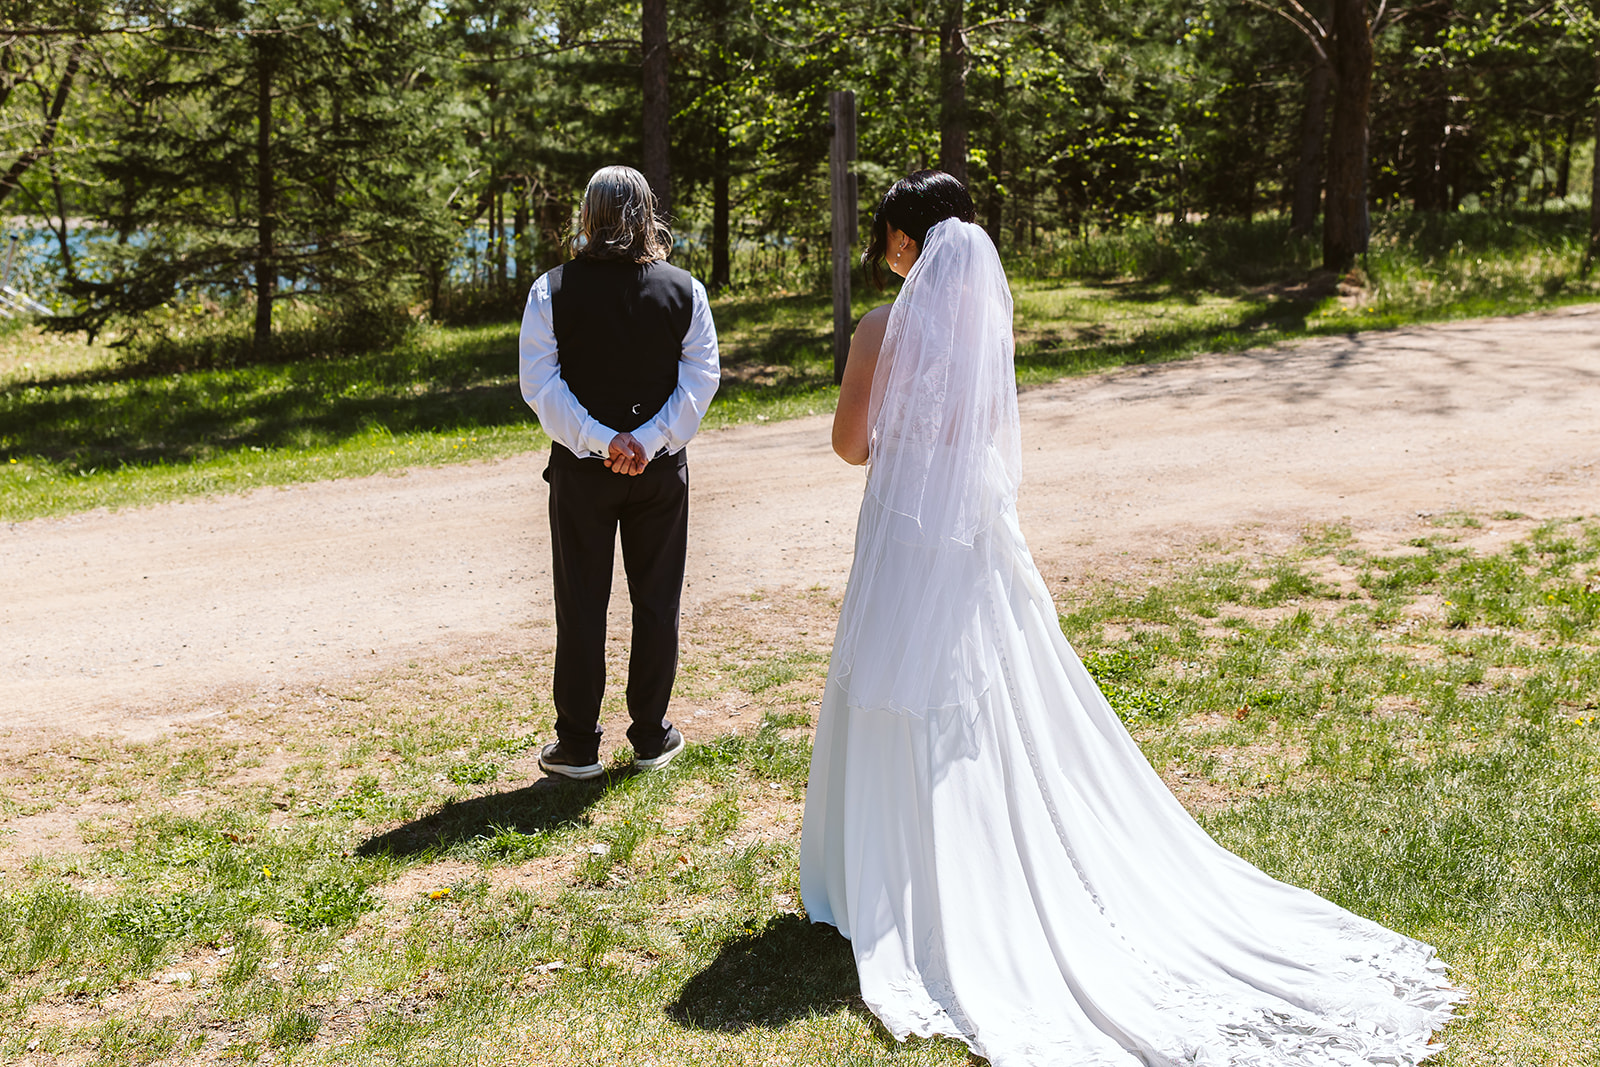 Intimate Northern MN Lakefront Resort wedding by Alyssa Ashley Photography